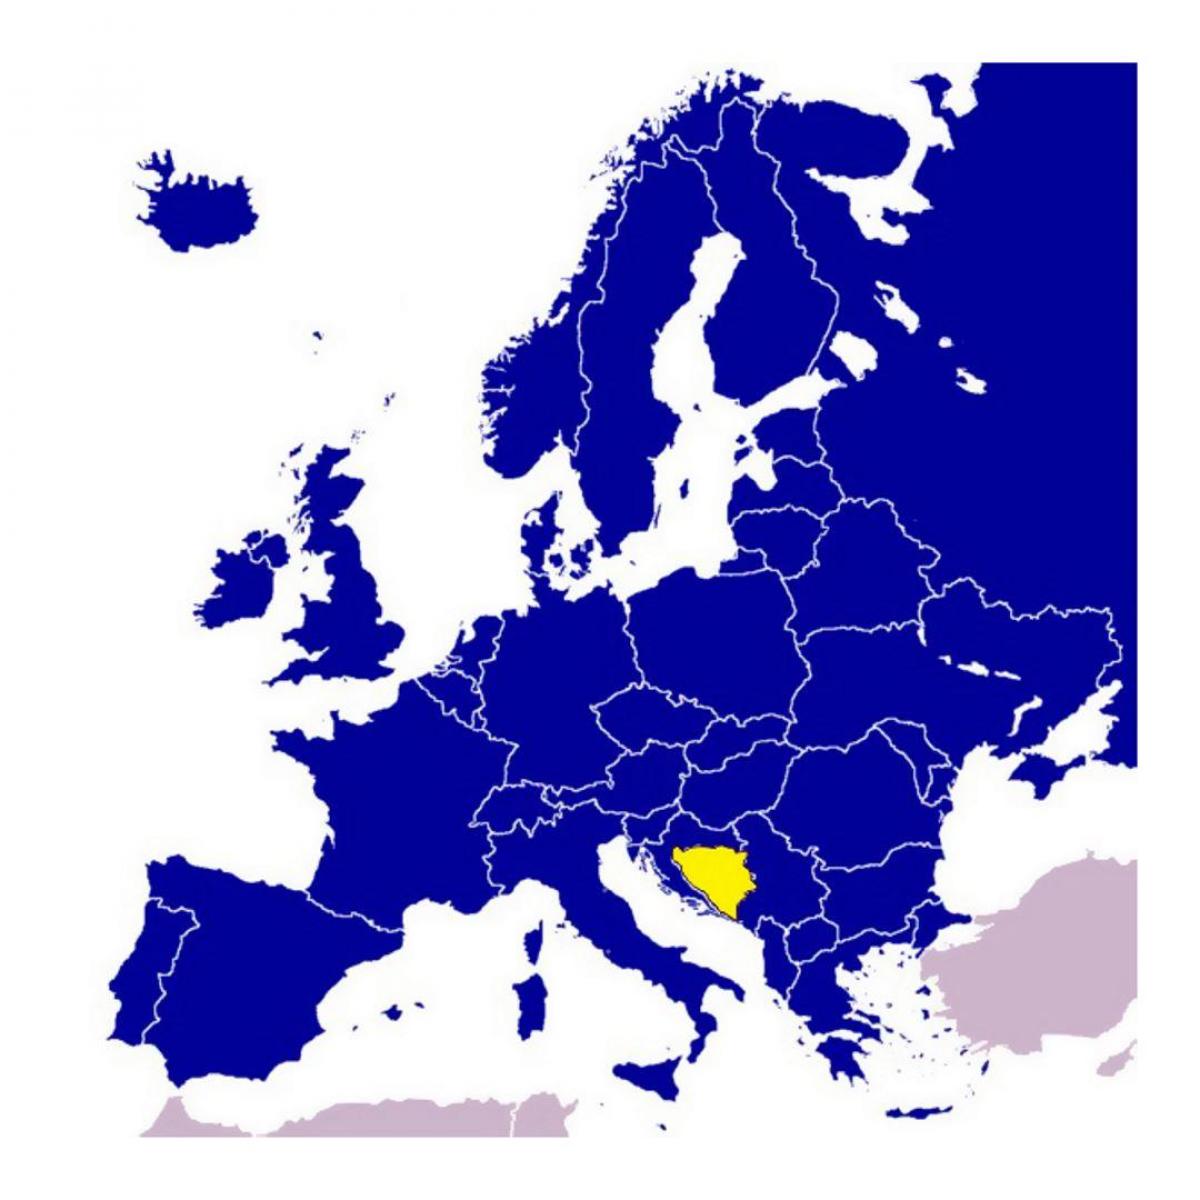 Mapa Bośni i Hercegowiny Europy